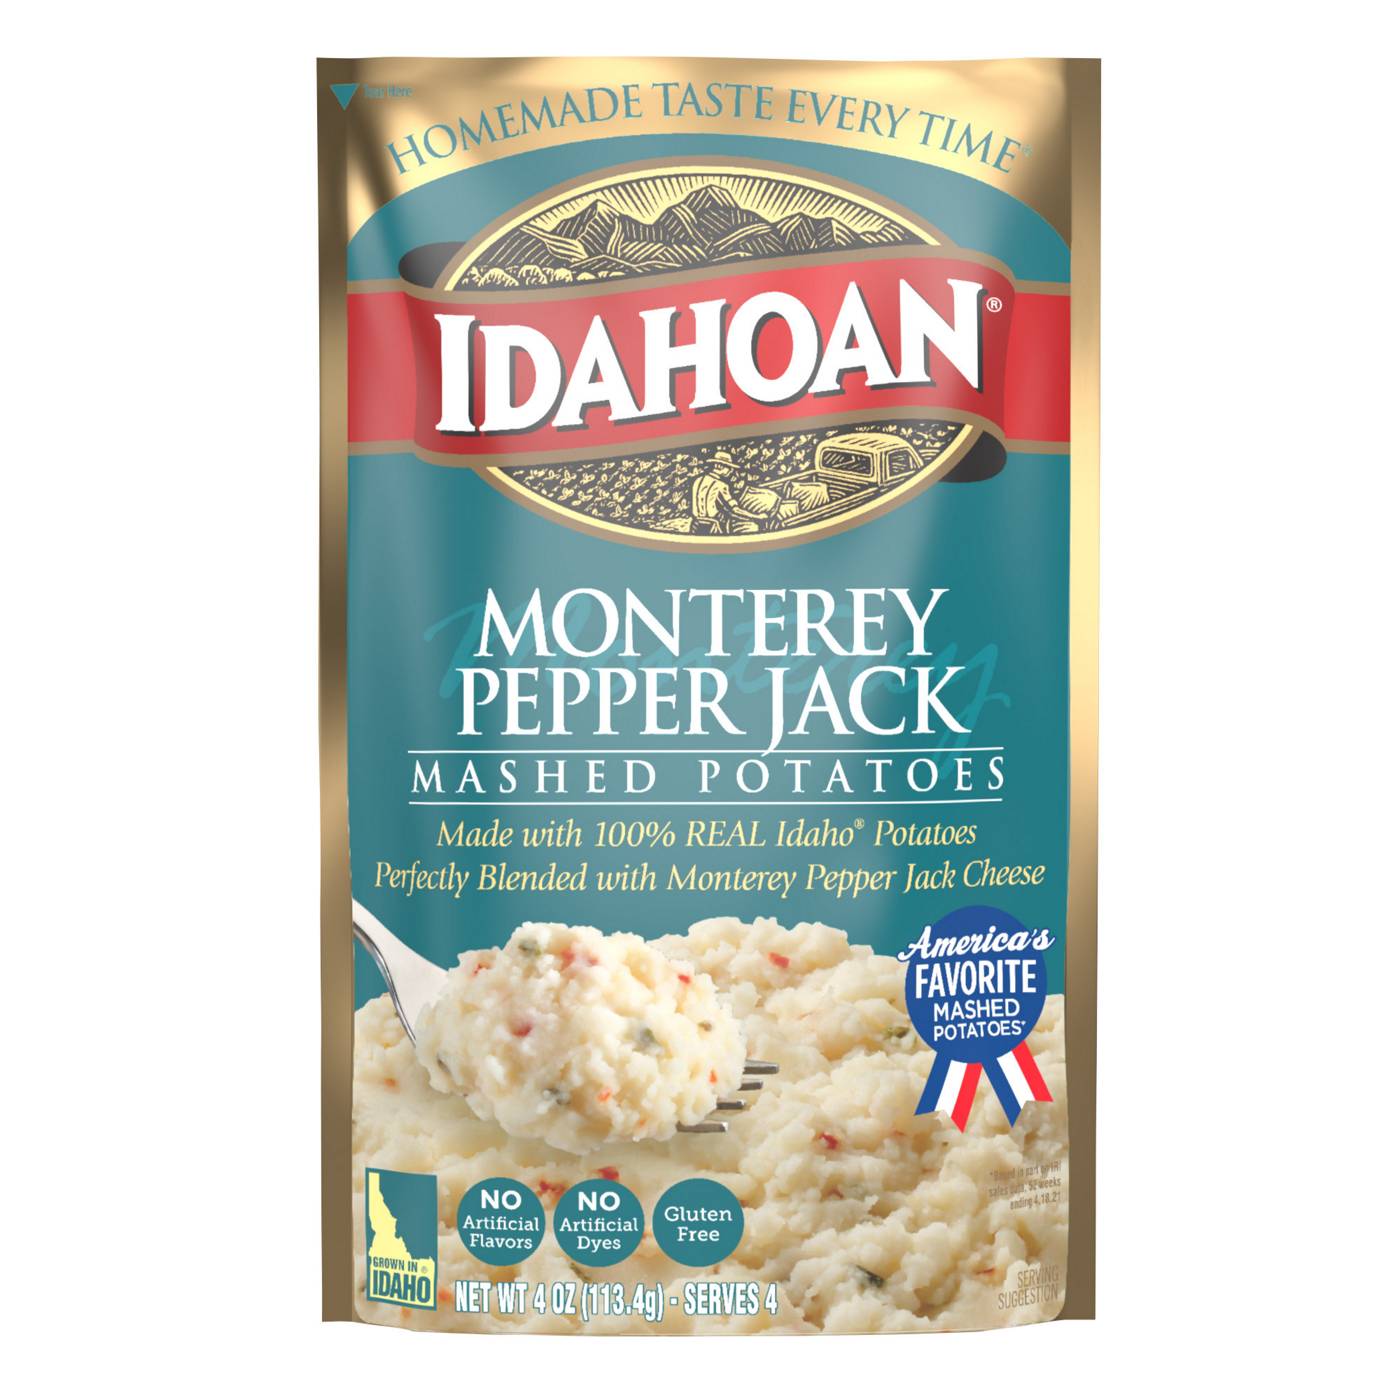 Idahoan Monterey Pepper Jack Mashed Potatoes; image 1 of 5